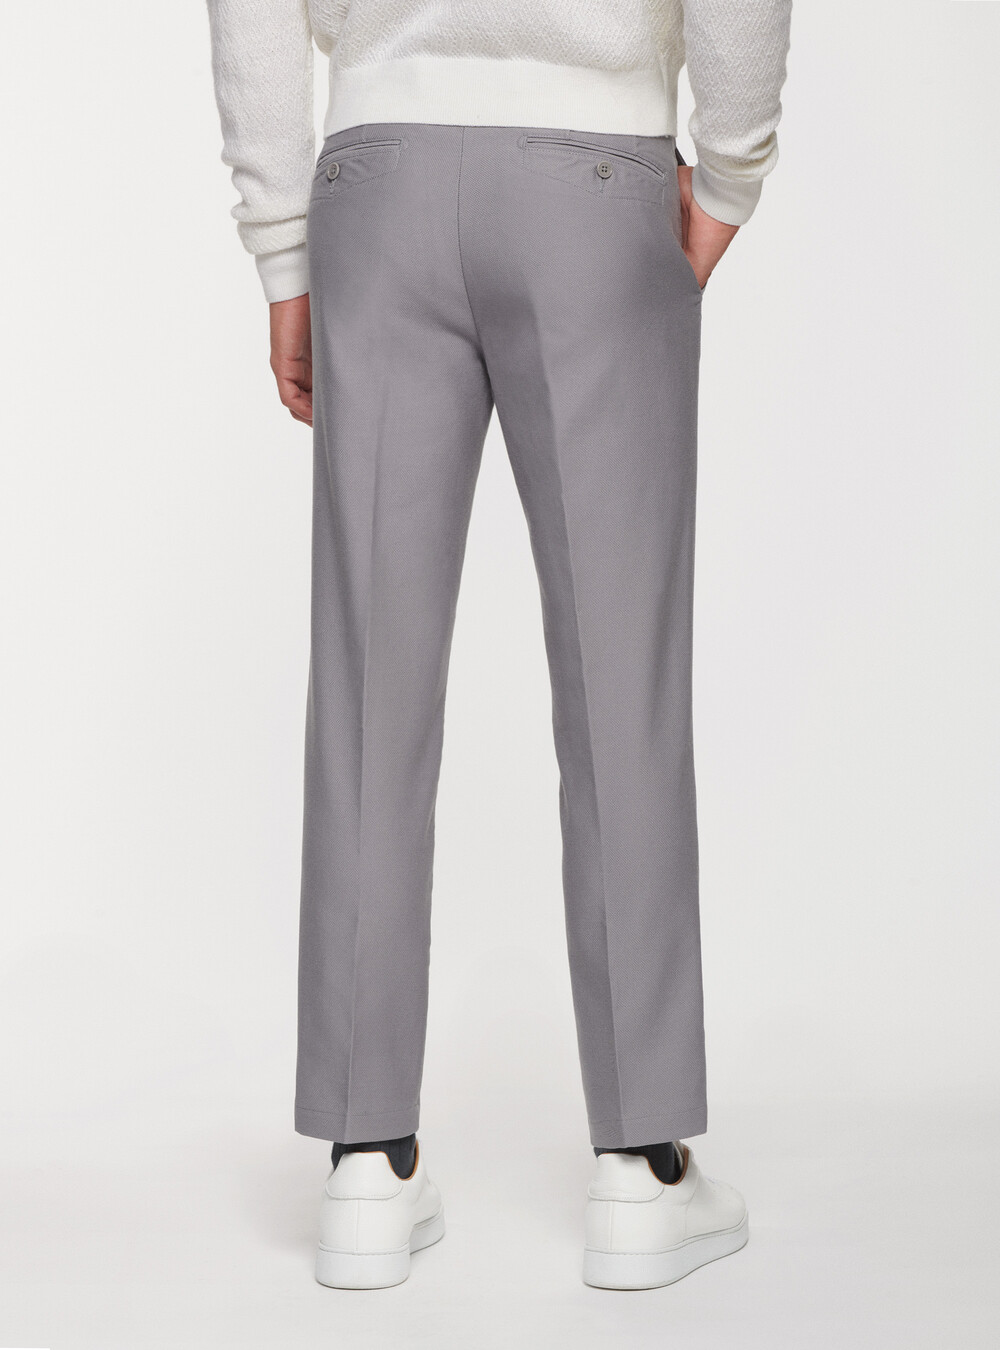 Rupa Torrido 7001 O.E Grey Thermal Trouser For Men